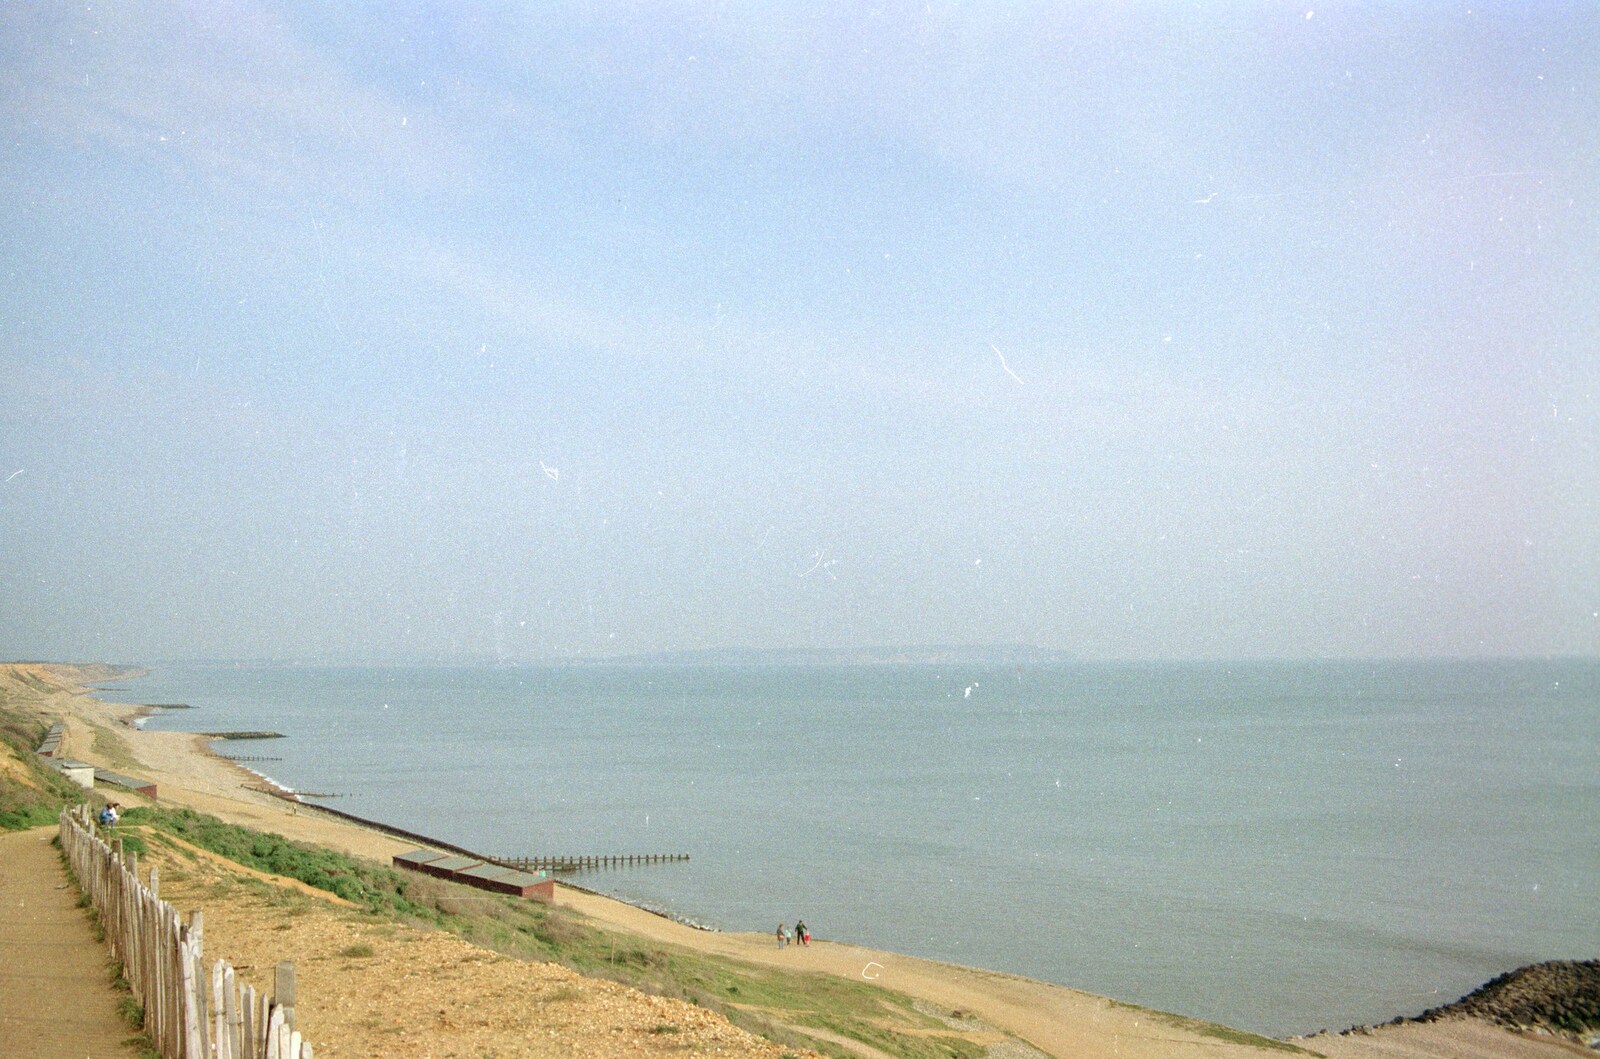 Barton-on-Sea and Farnborough Miscellany, Hampshire - 11th April 1989: Barton sea front, looking towards the Isle of Wight